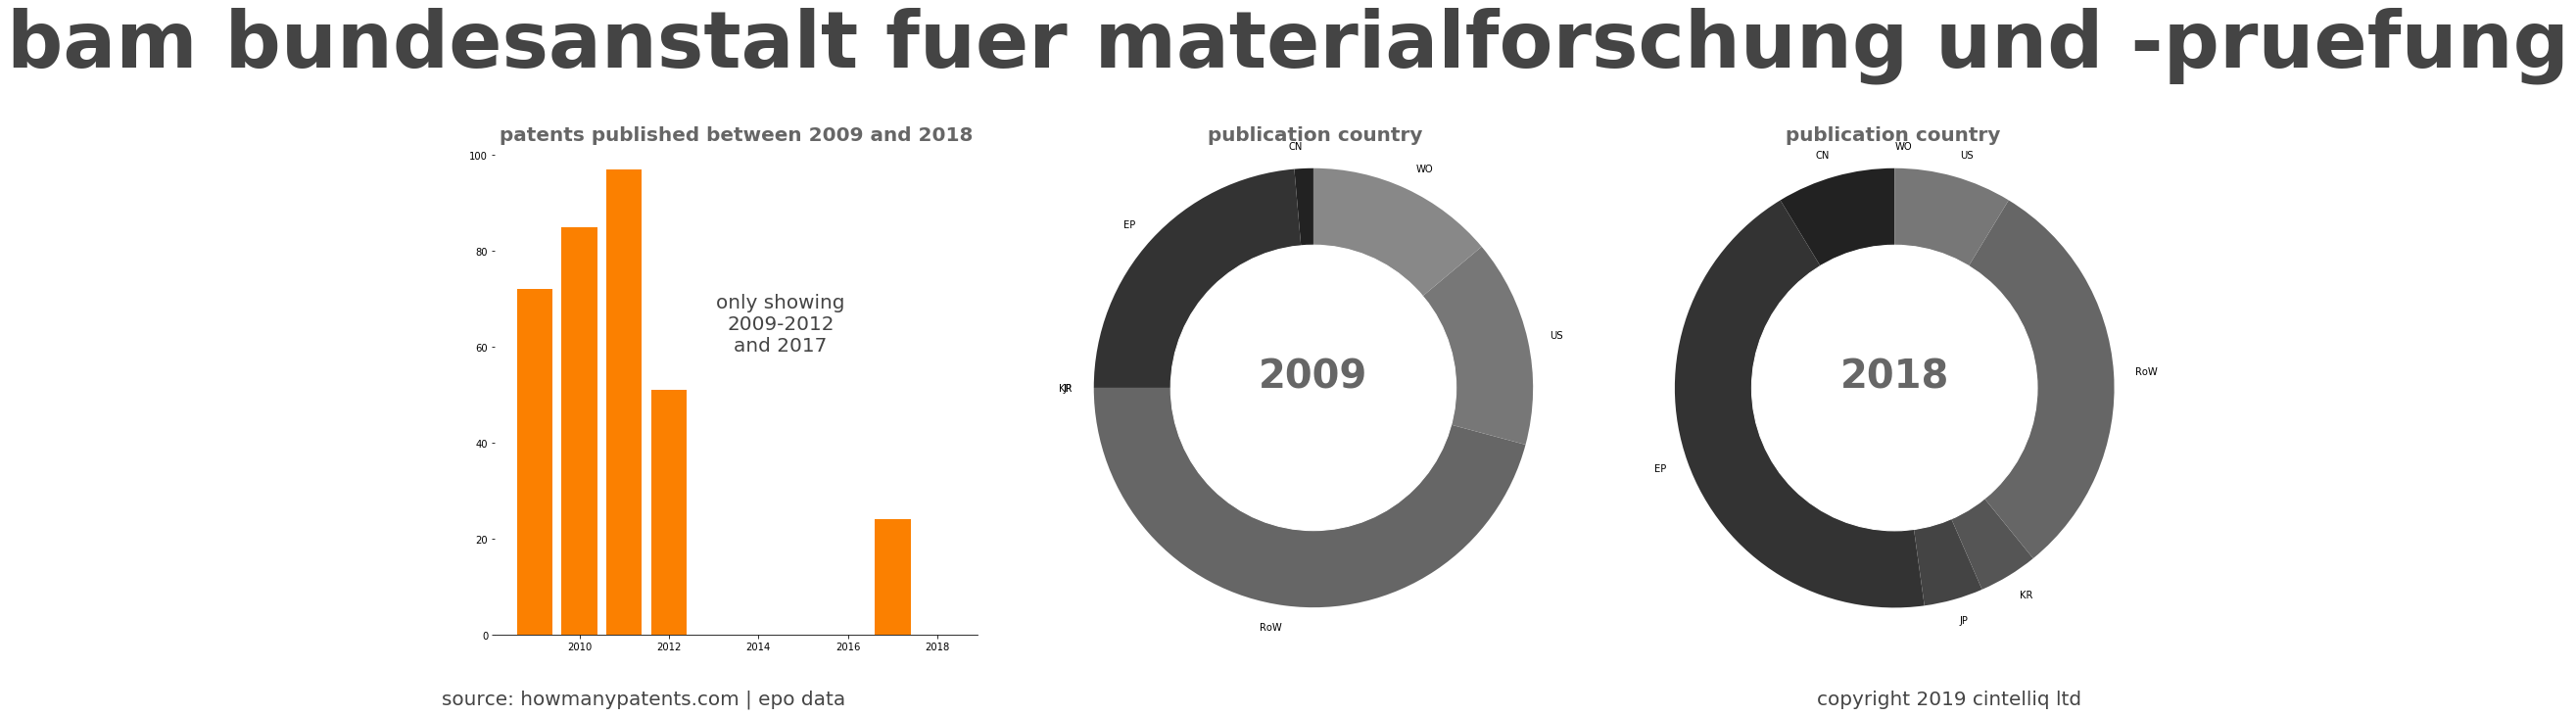 summary of patents for Bam Bundesanstalt Fuer Materialforschung Und -Pruefung